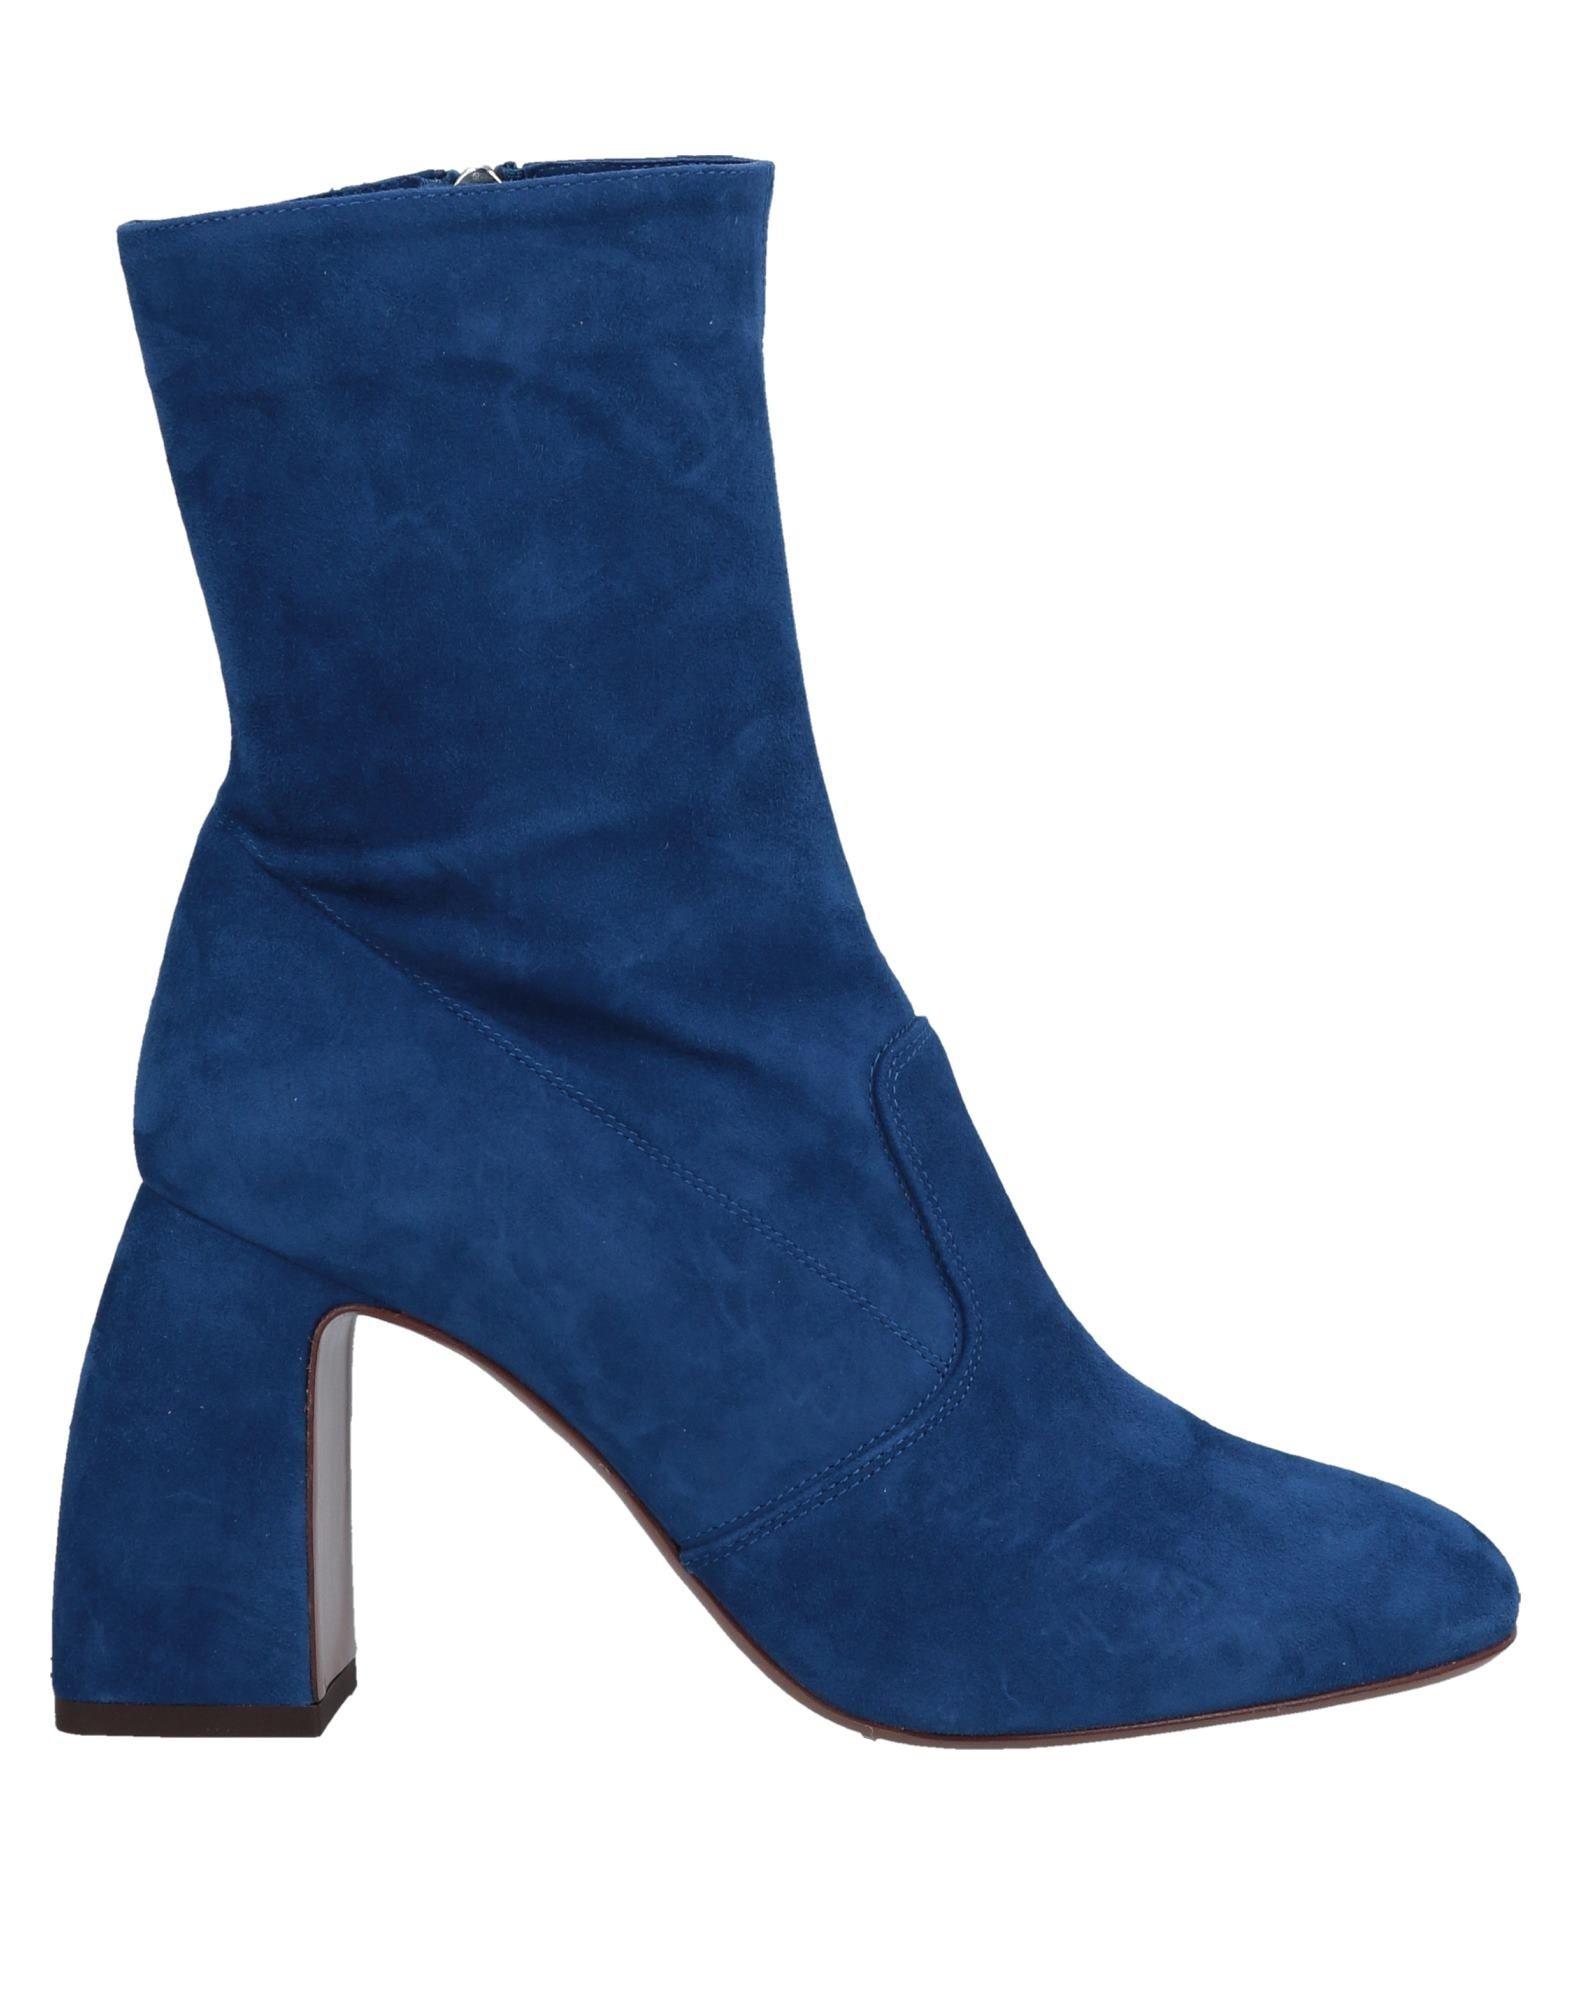 L'Autre Chose Suede Ankle Boots in Bright Blue (Blue) - Lyst